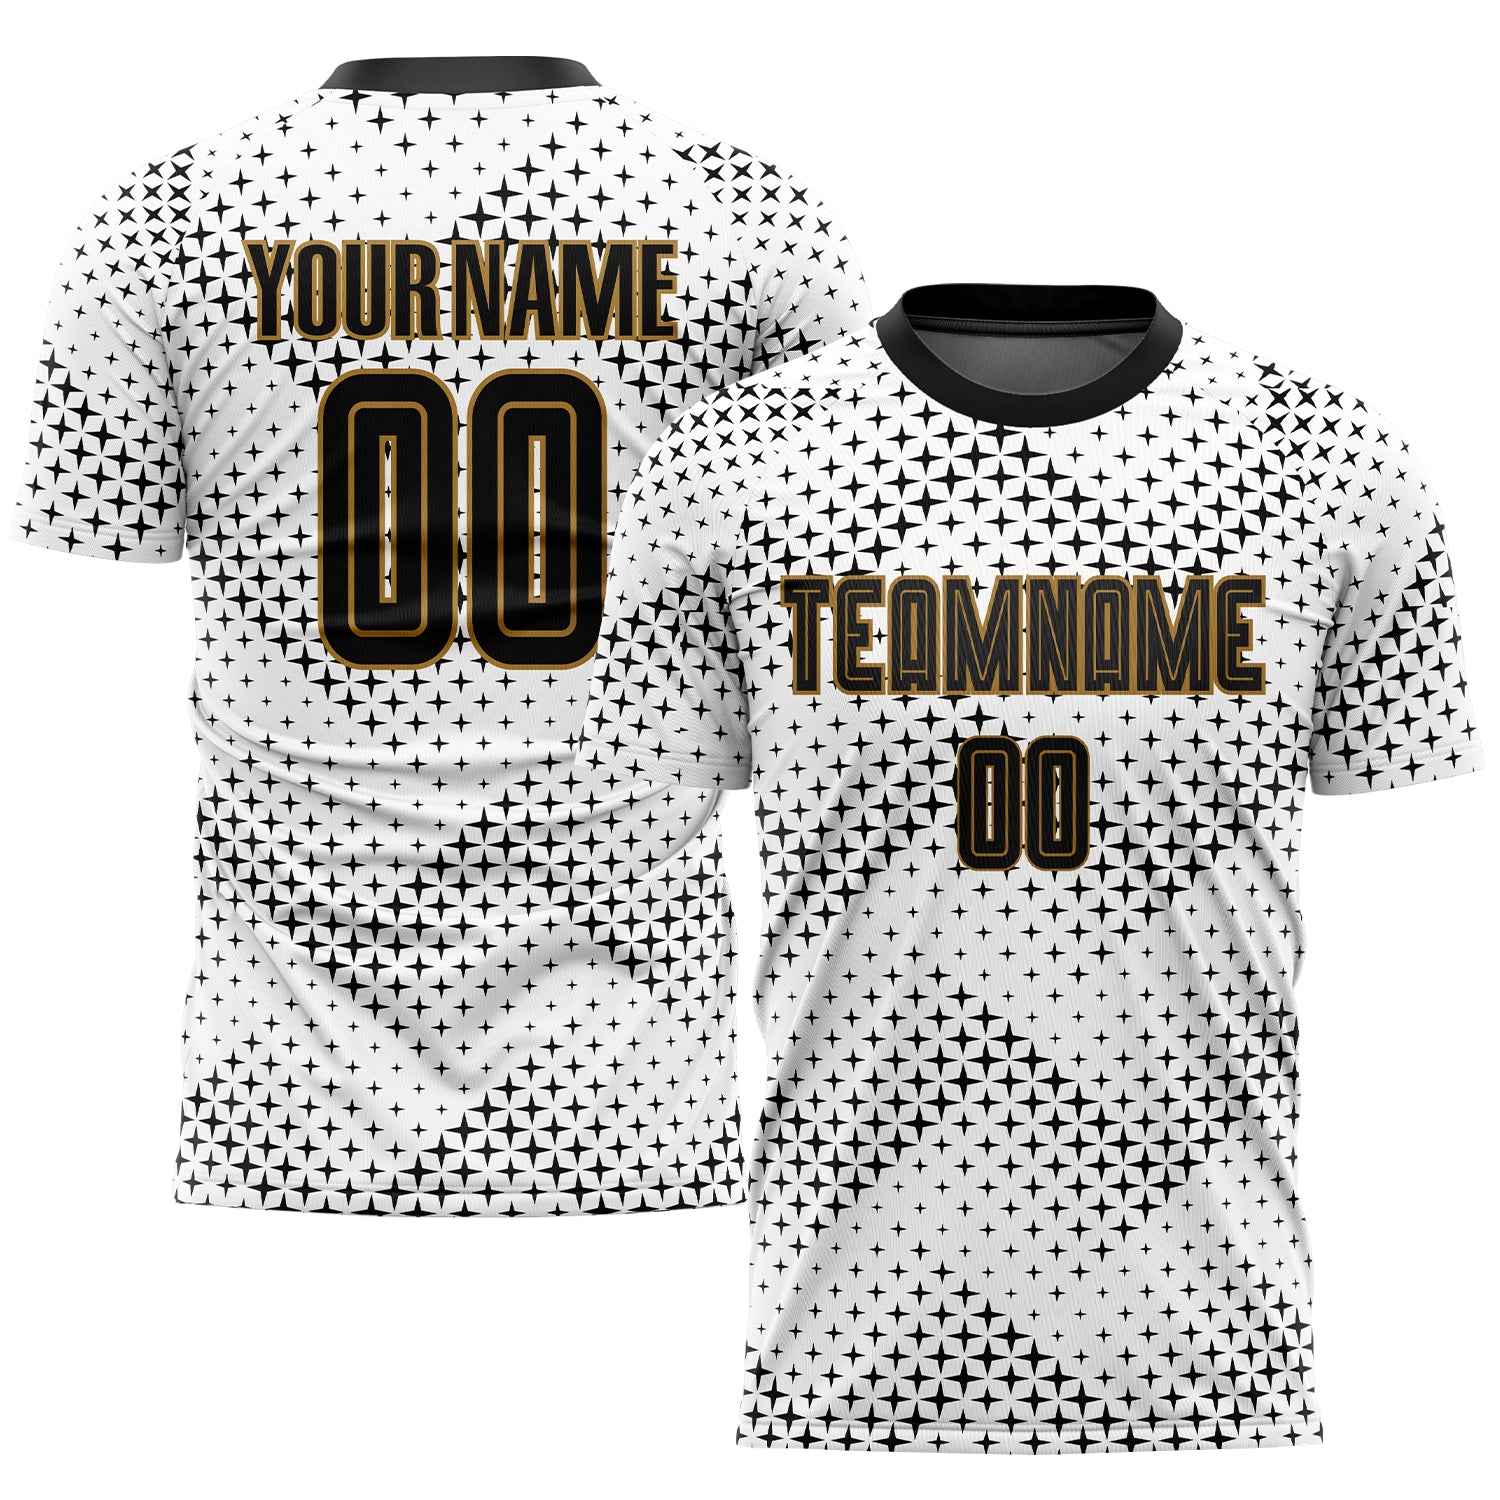 Cheap Custom White Black-Old Gold Sublimation Soccer Uniform Jersey Free  Shipping – CustomJerseysPro